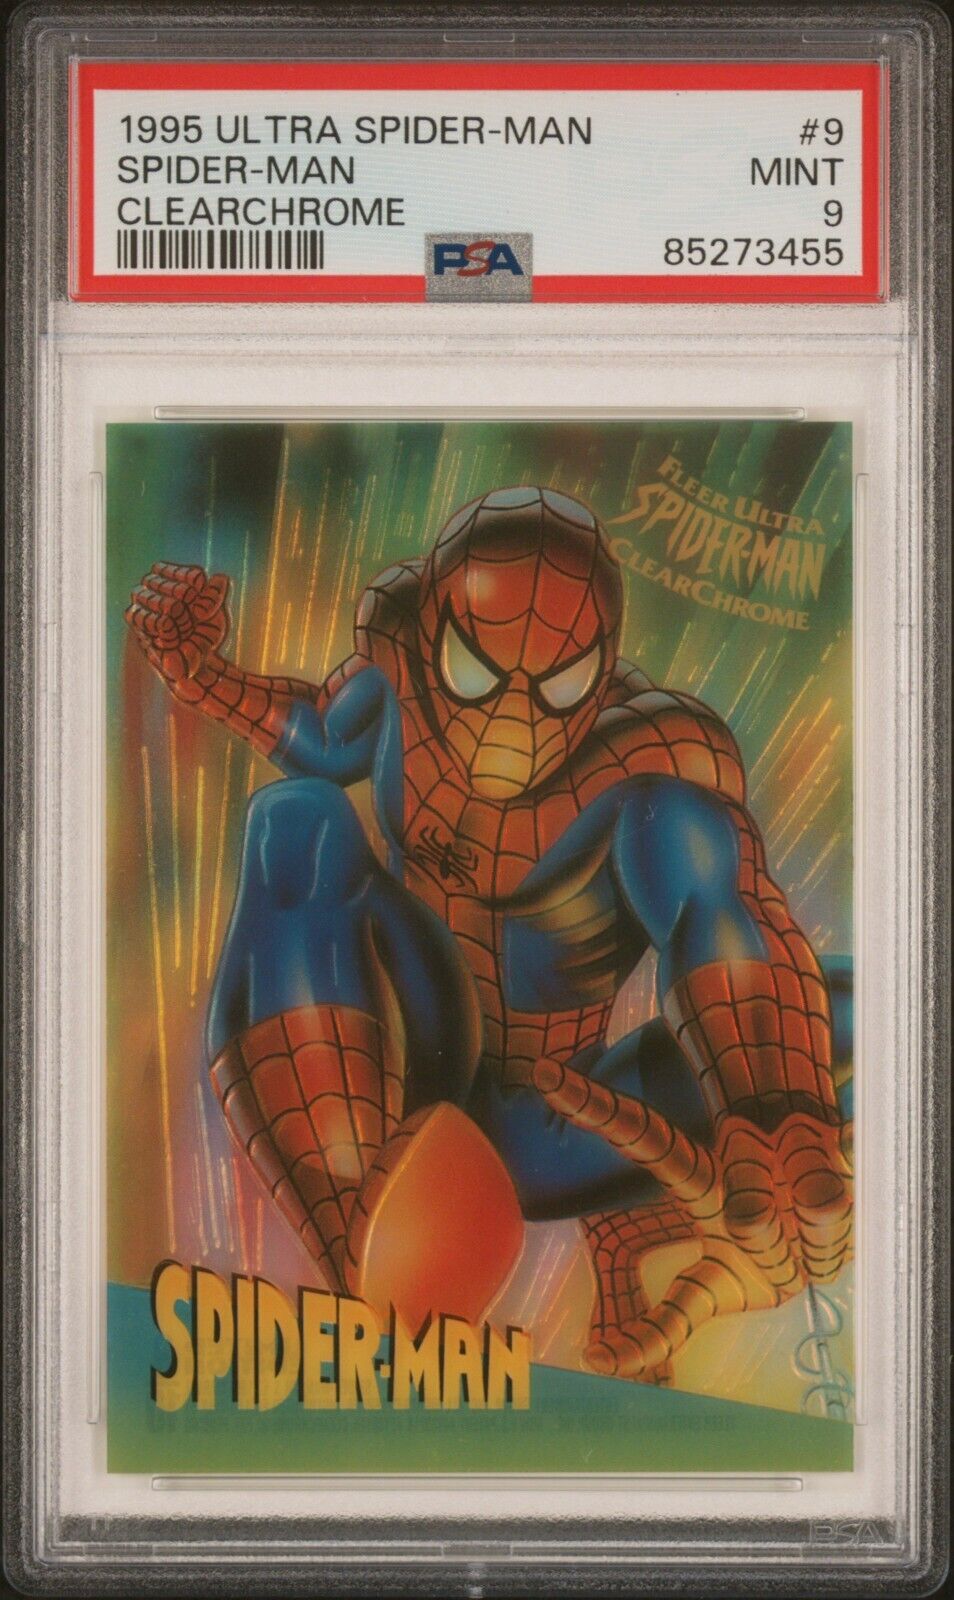 1995 Fleer Ultra Spider-Man ClearChrome #9 Spider-Man PSA 9 Mint Graded Insert